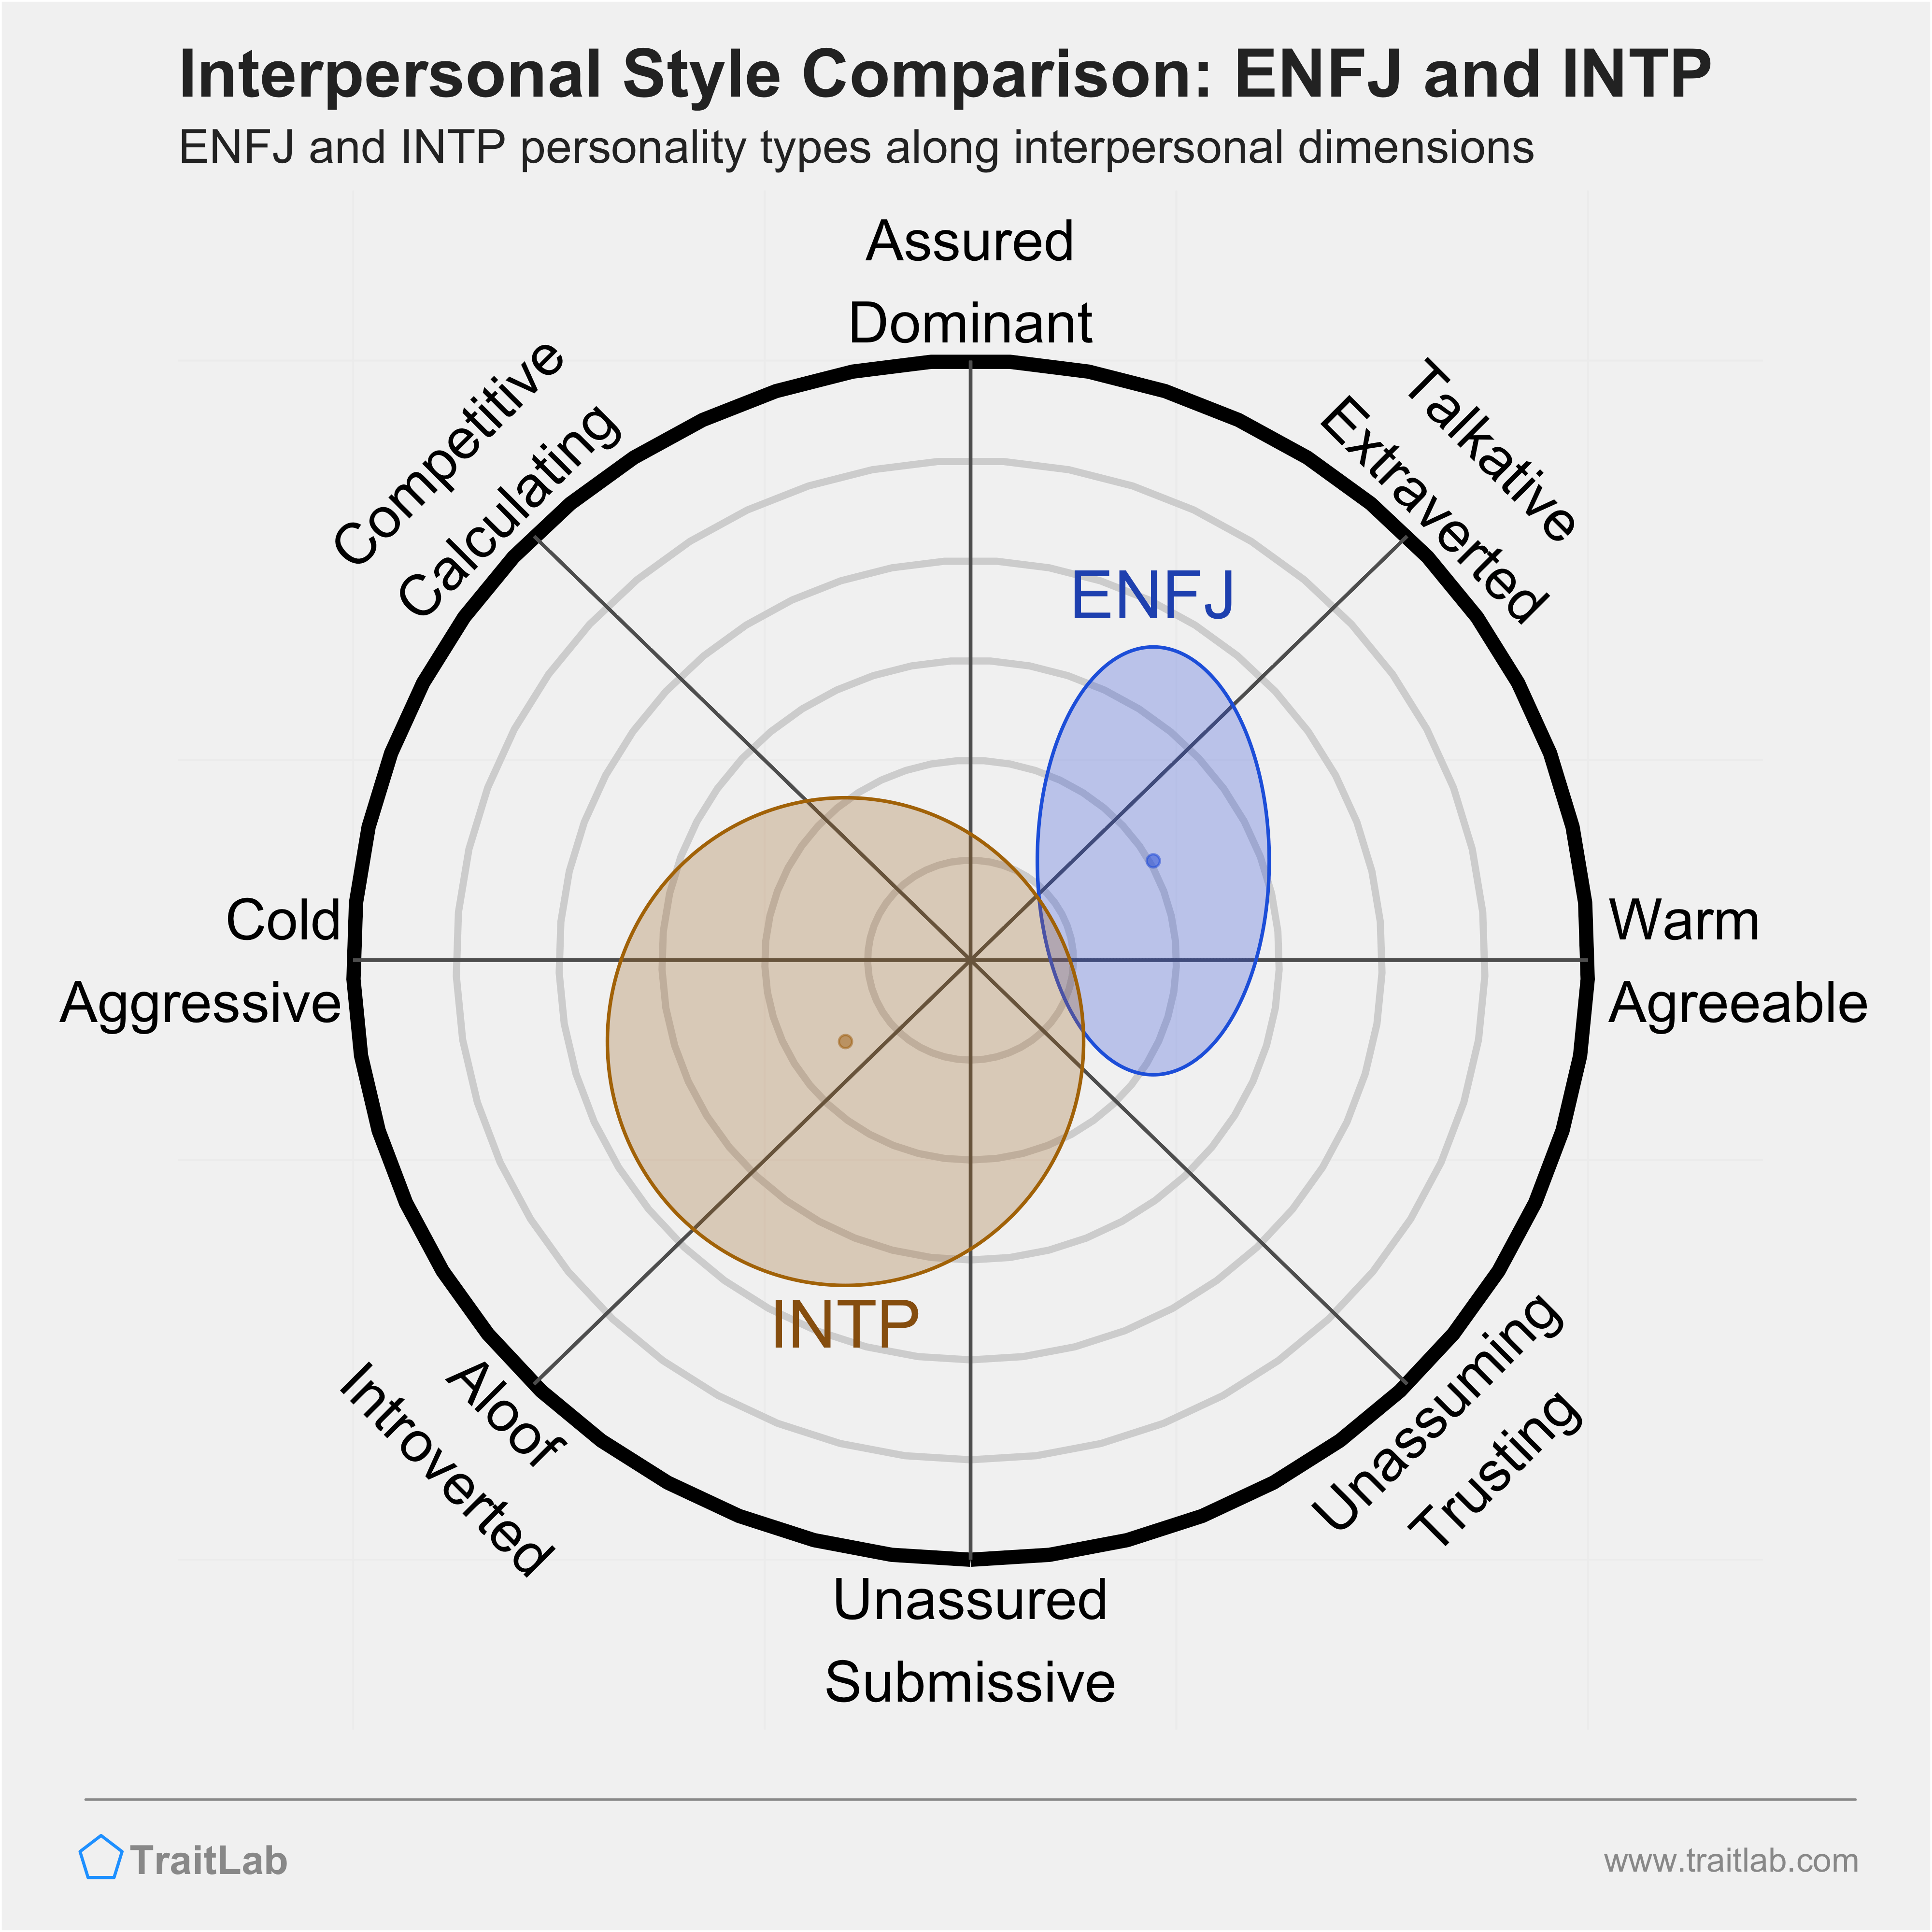 ENFJ and INTP comparison across interpersonal dimensions